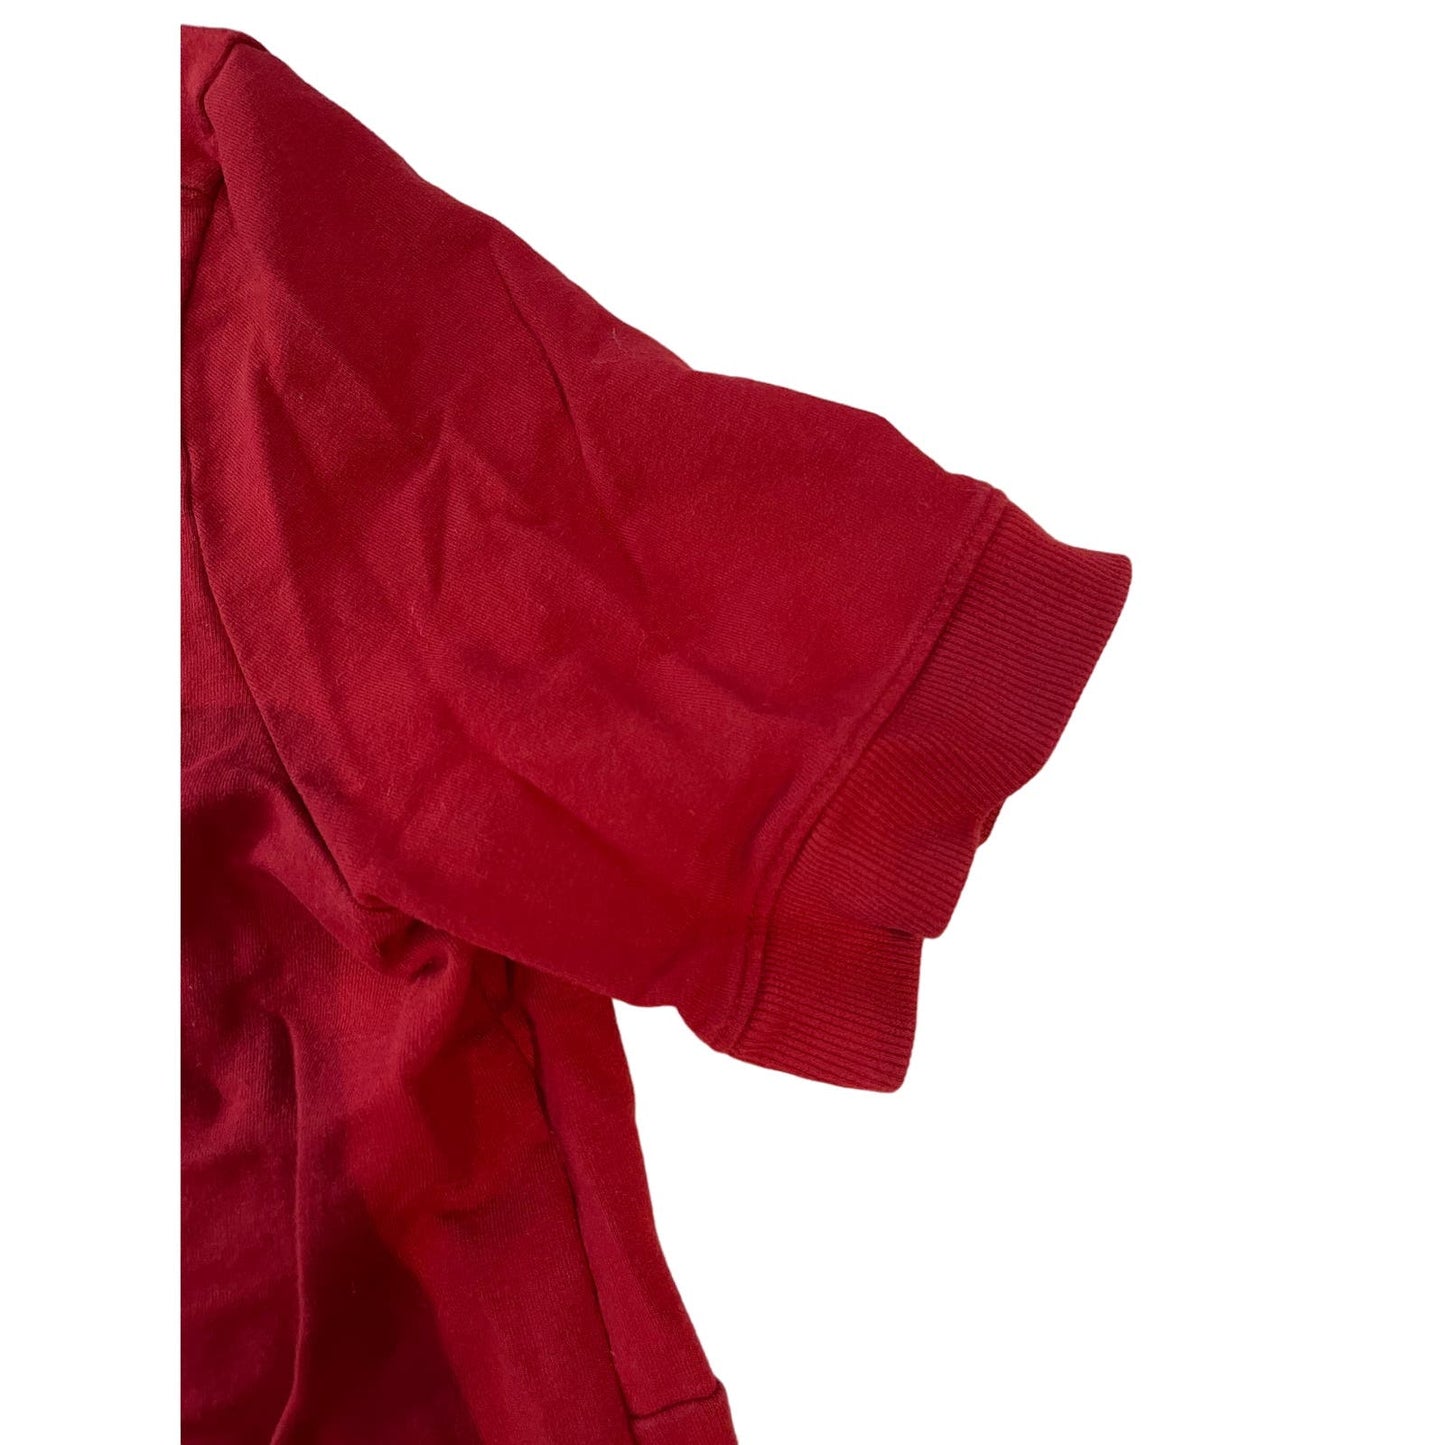 Universal Standard Red Blouse Top Women's Plus Size 2XS